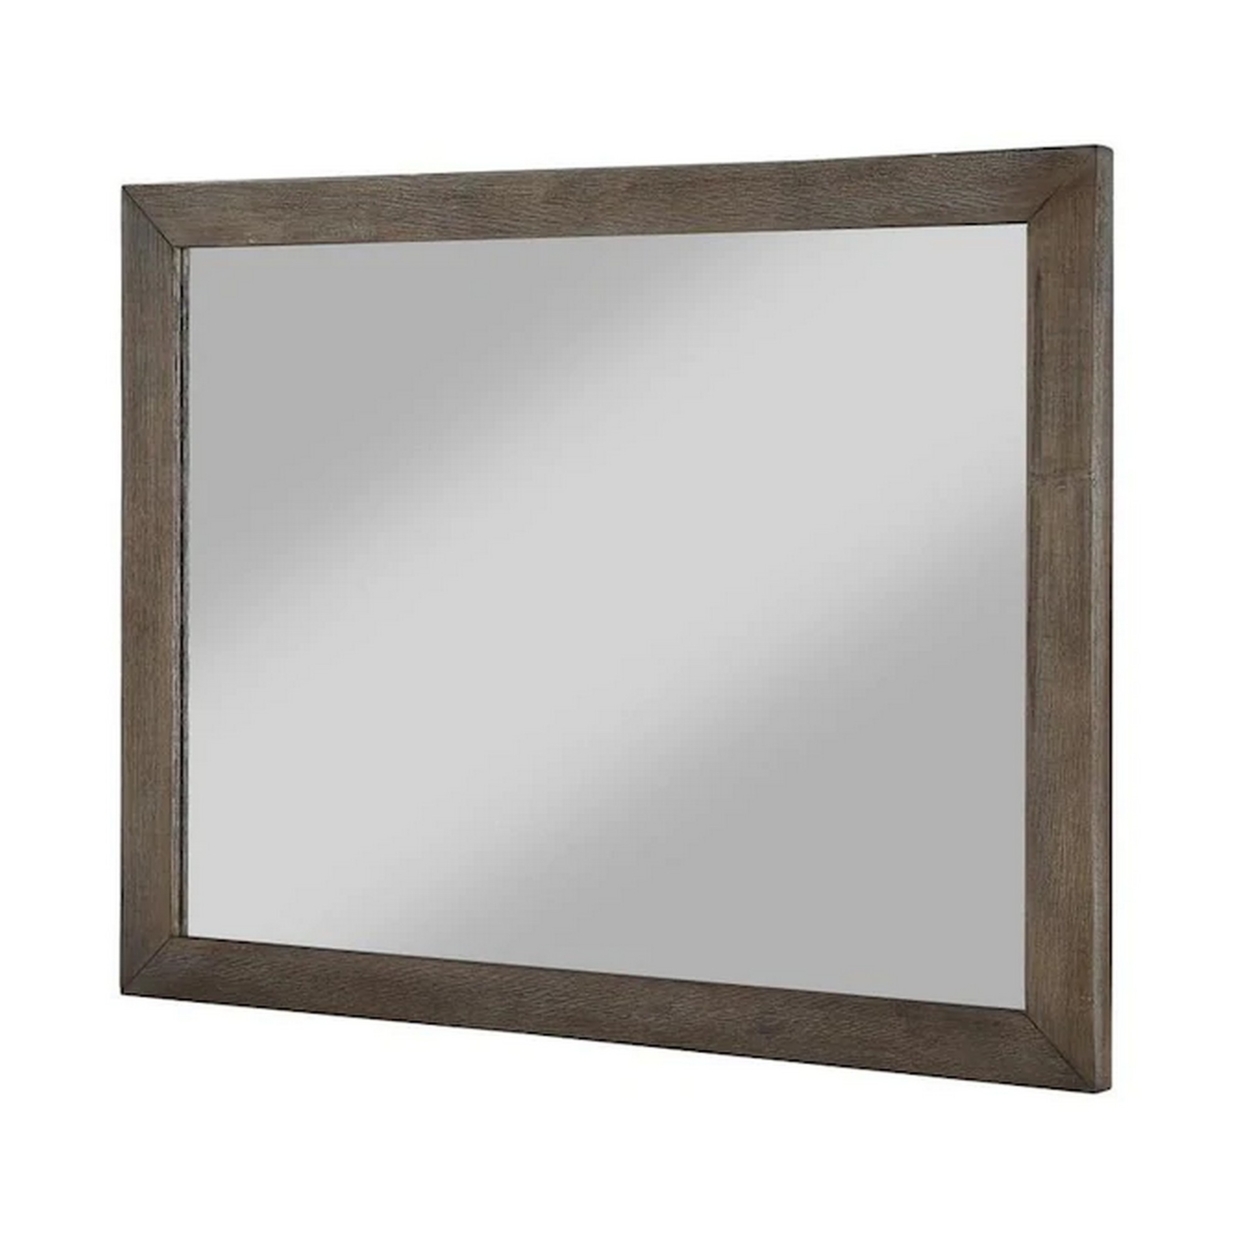 Mid Century Style Wooden Frame Mirror With Rough Hewn Saw Details, Brown- Saltoro Sherpi